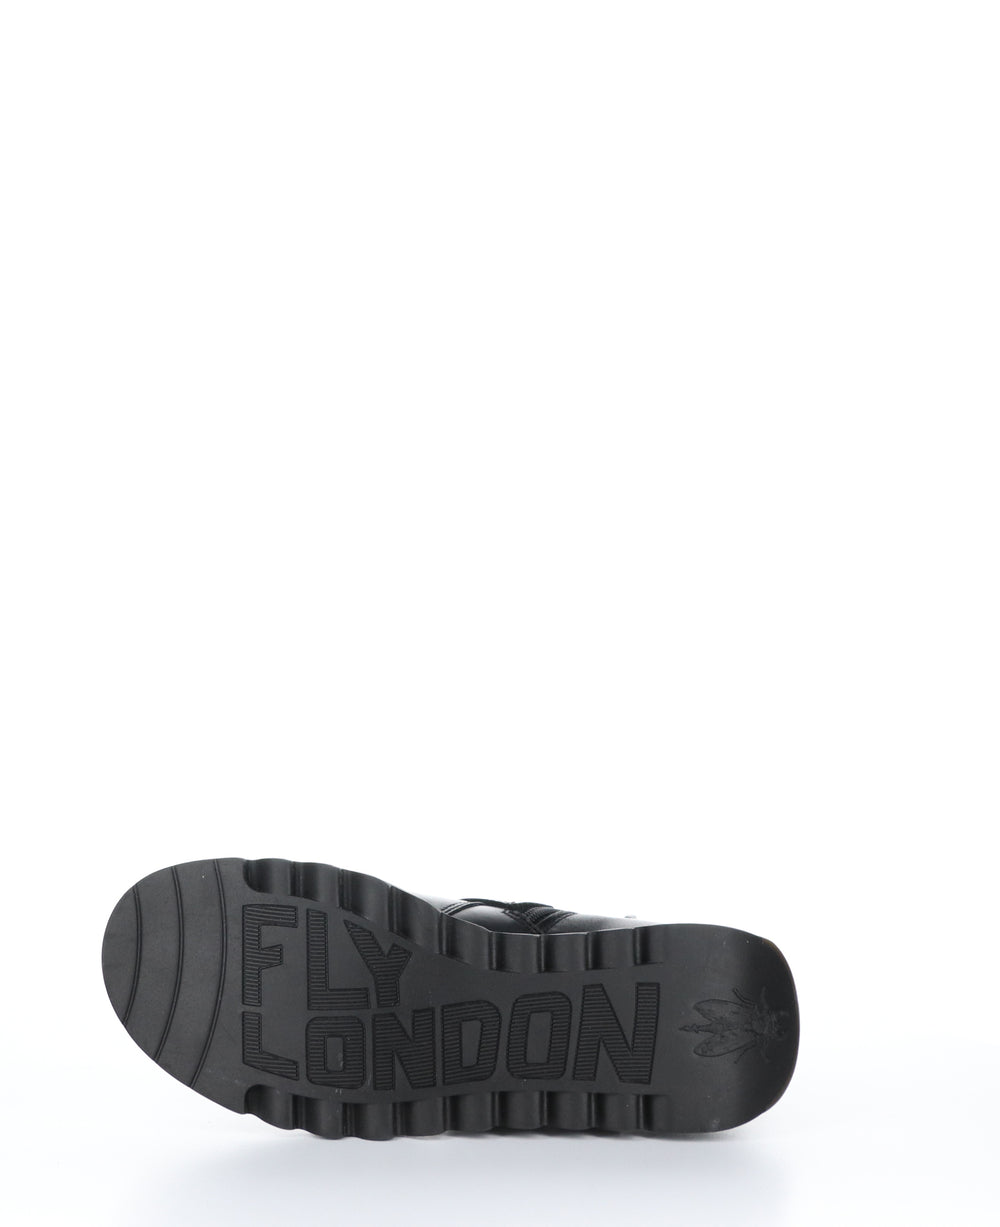 SIAS812FLY Black Zip Up Ankle Boots|SIAS812FLY Bottines avec Fermeture Zippée in Noir